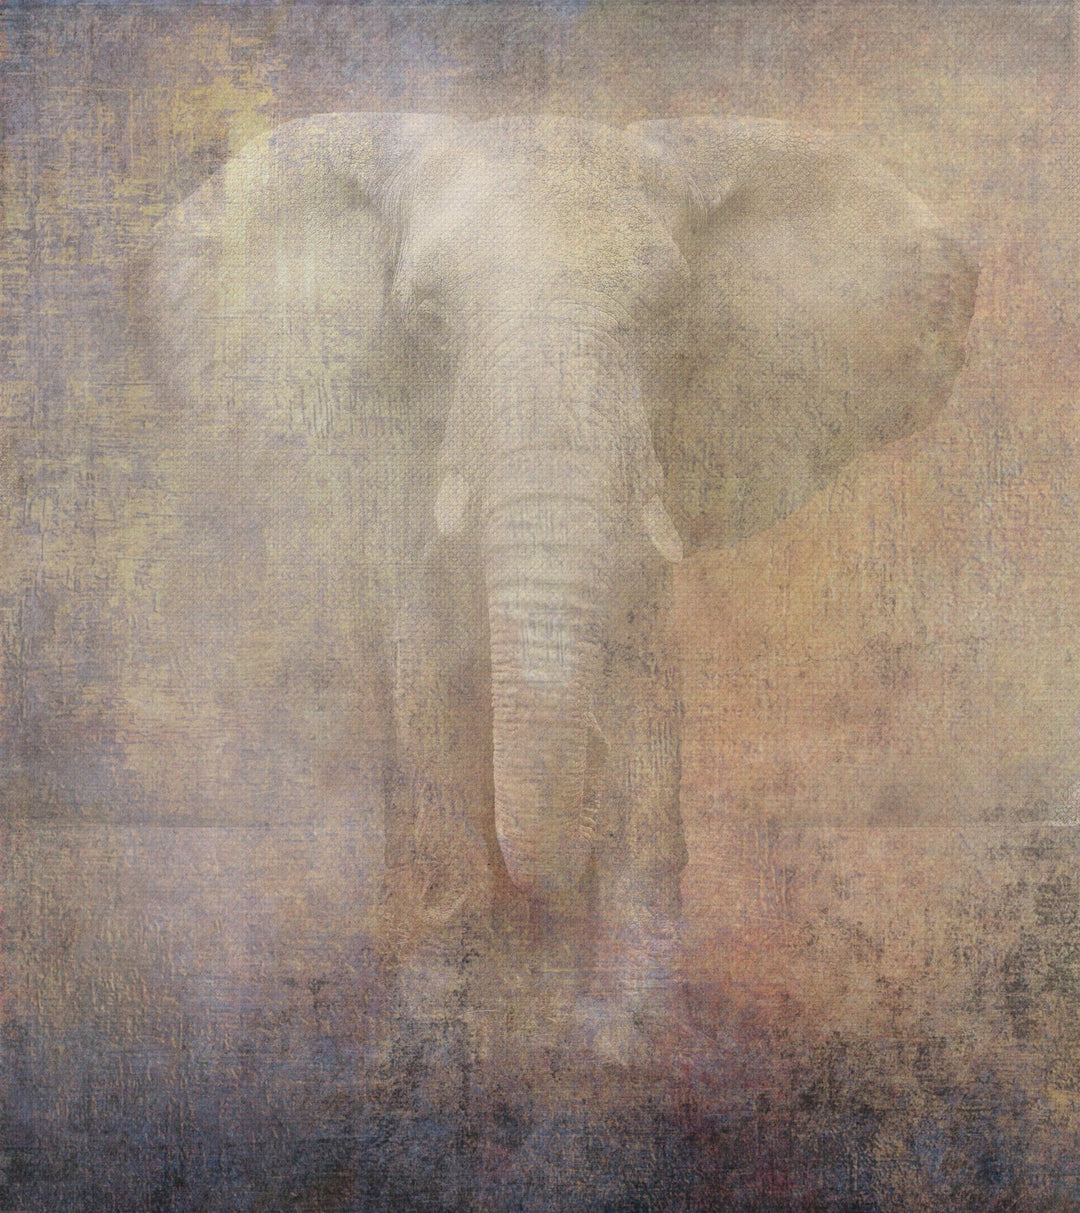 Painting on Canvas ELEPHANT 2 01